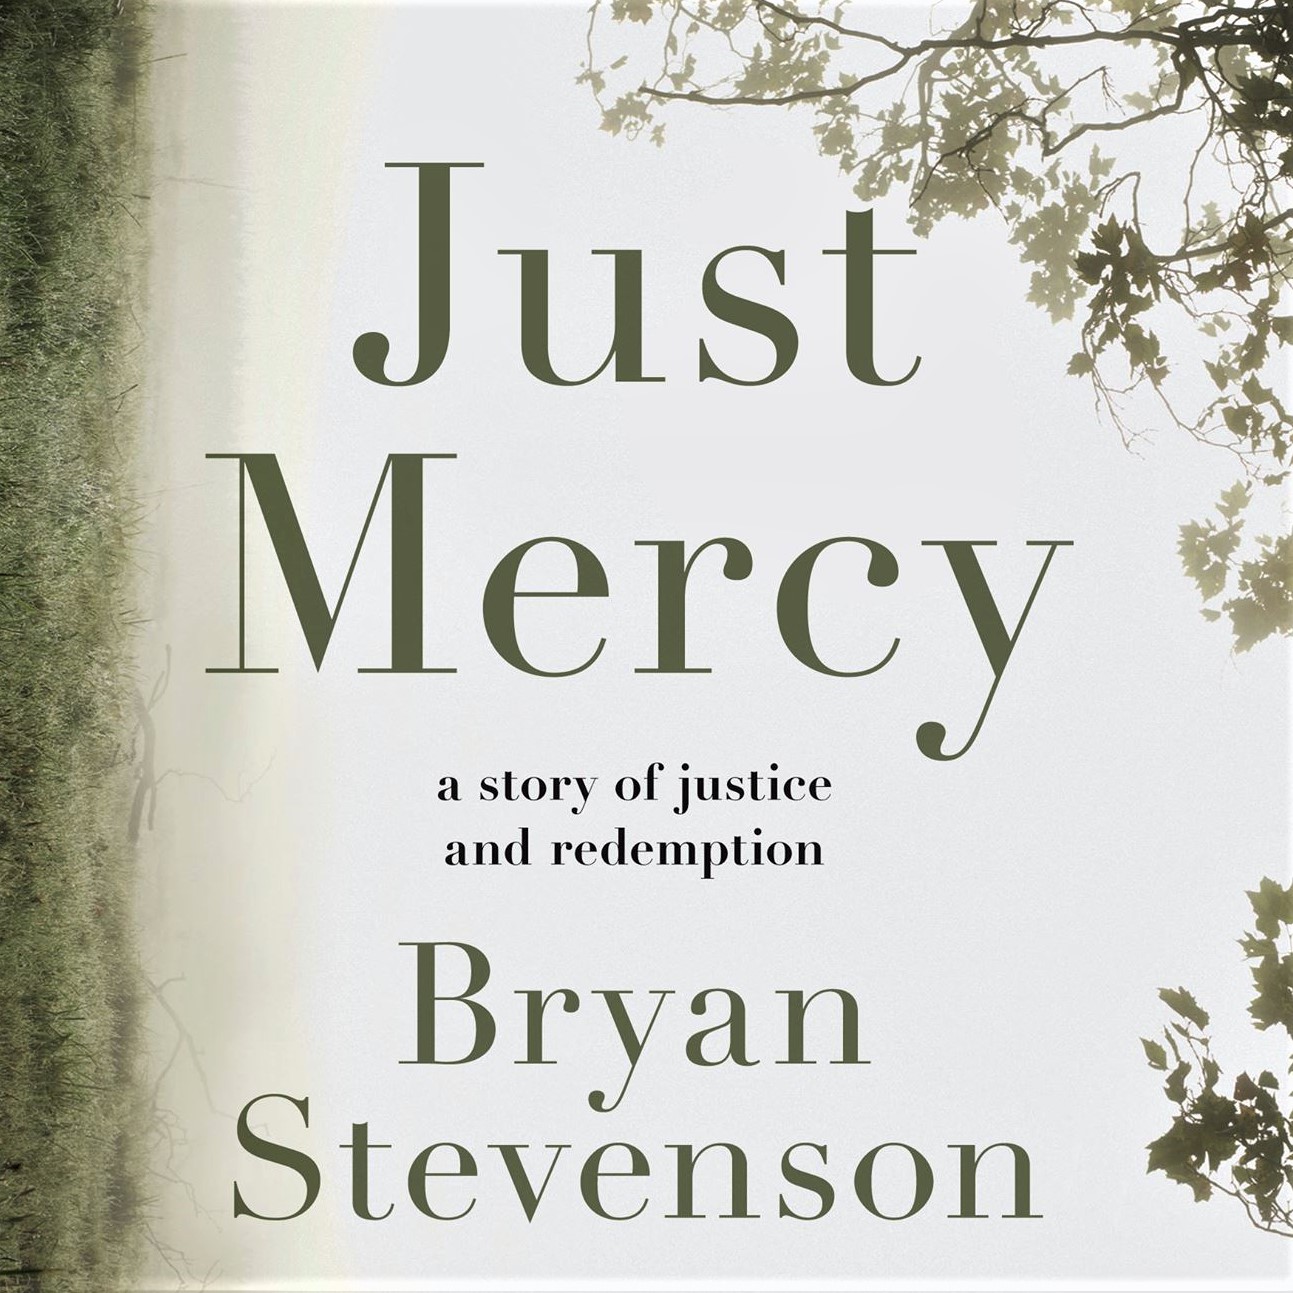 Cover image for Bryan Stevenson's 'Just Mercy'